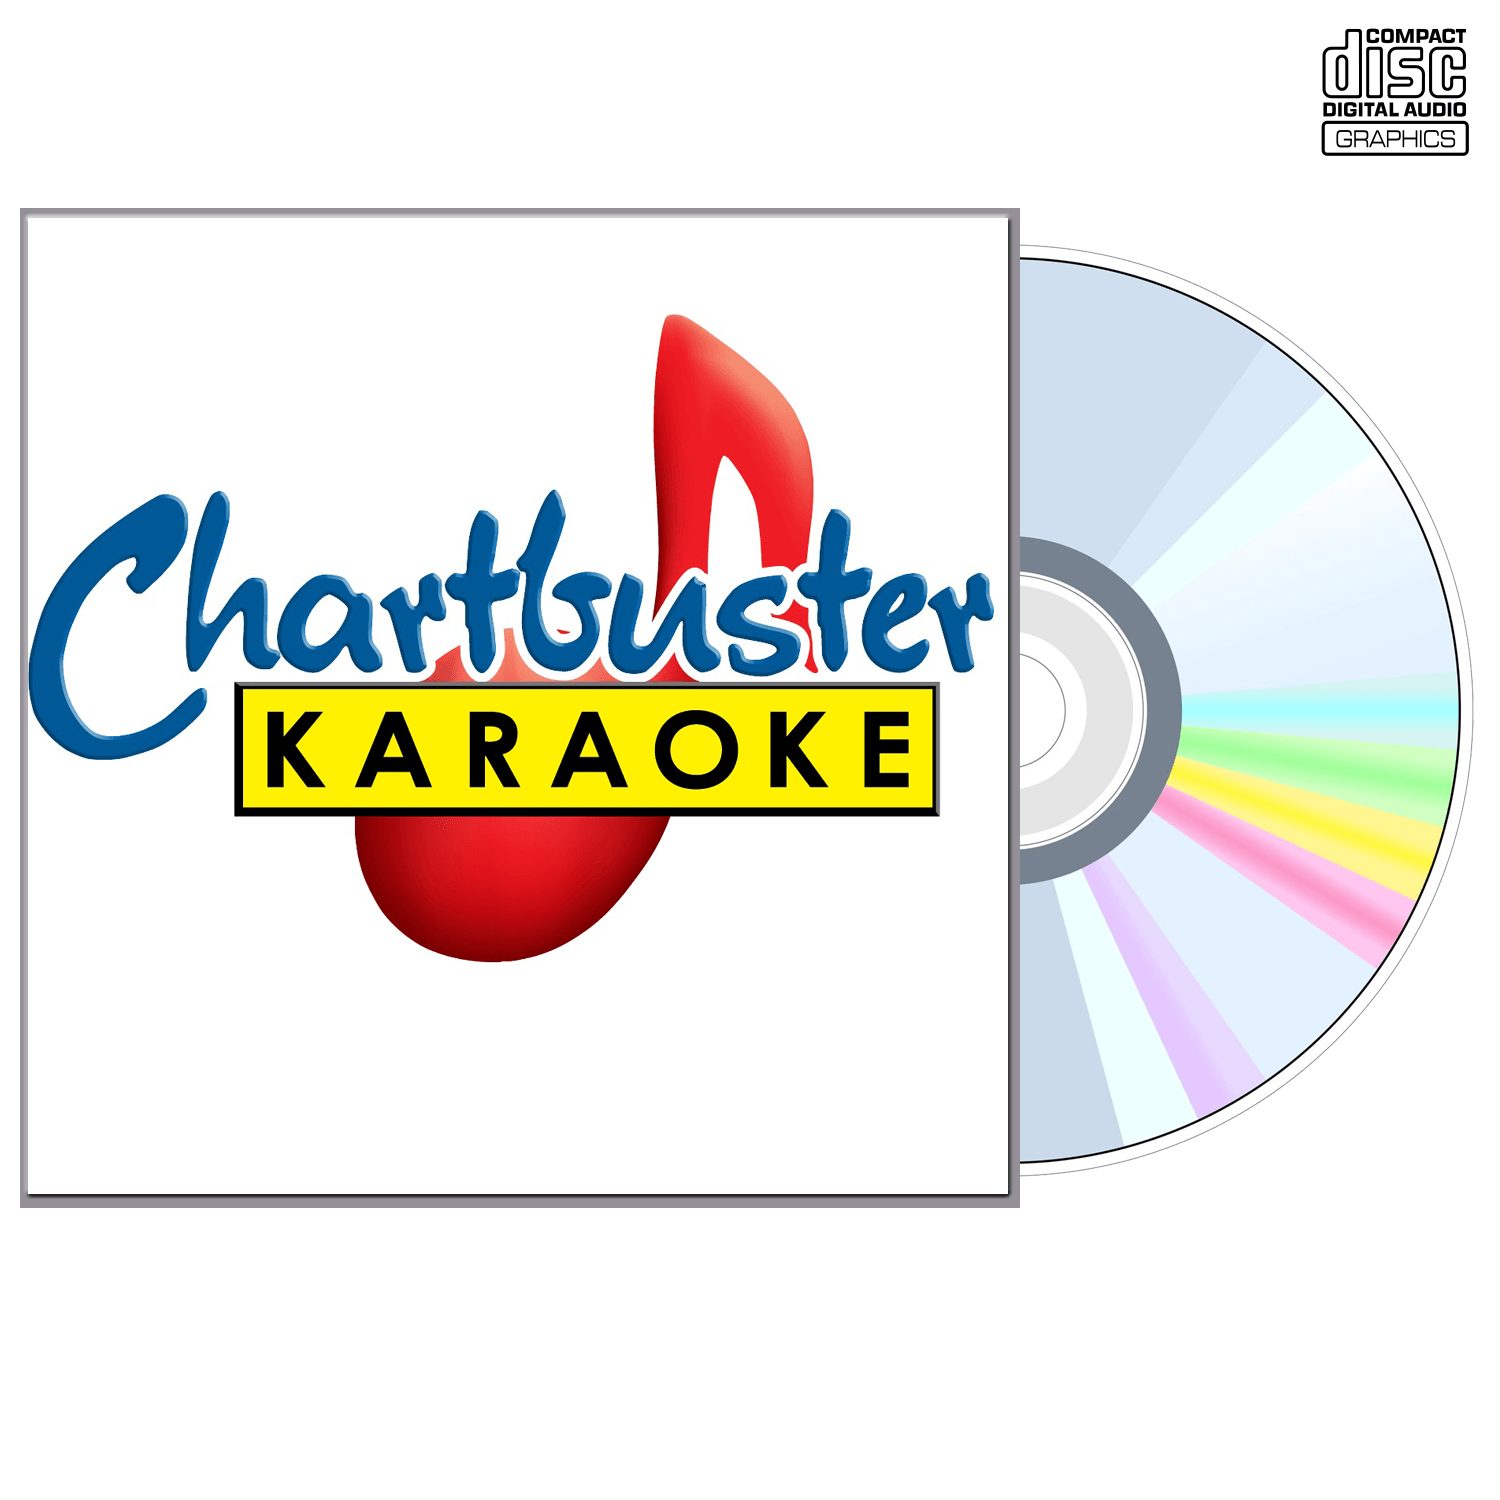 Air Supply - CD+G - Chartbuster Karaoke - Karaoke Home Entertainment